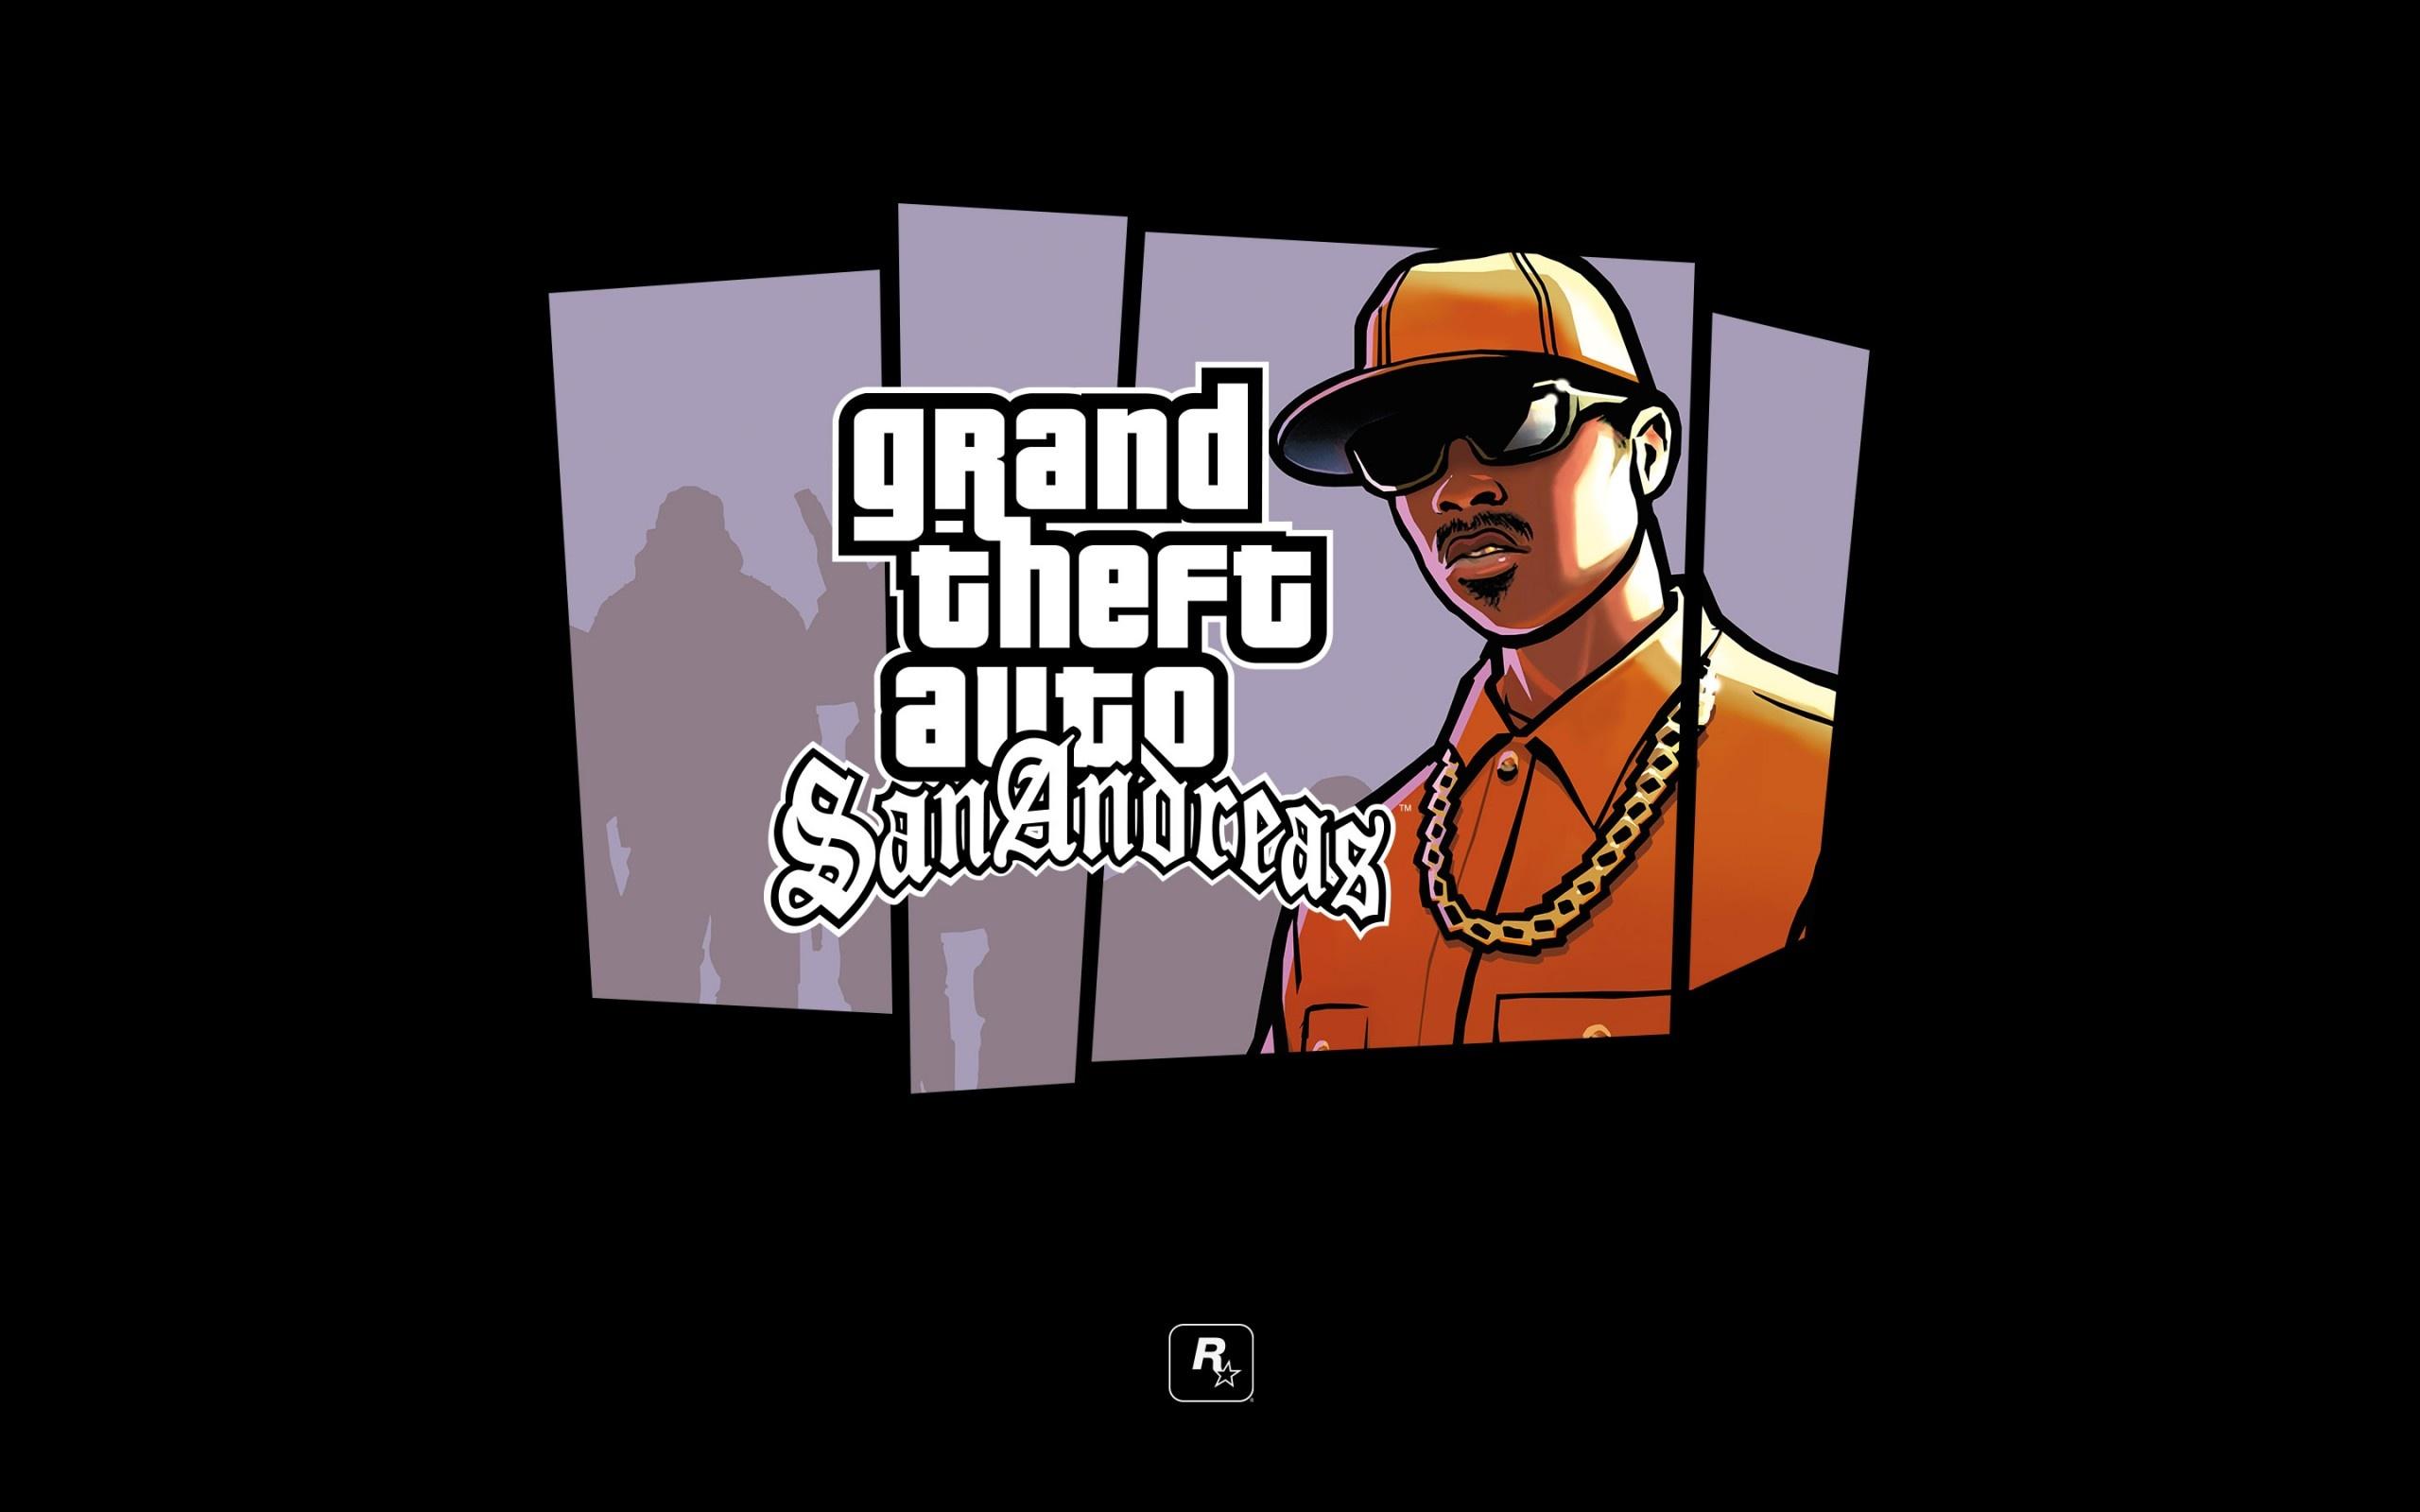 HD wallpaper: Grand Theft Auto: San Andreas | Wallpaper Flare